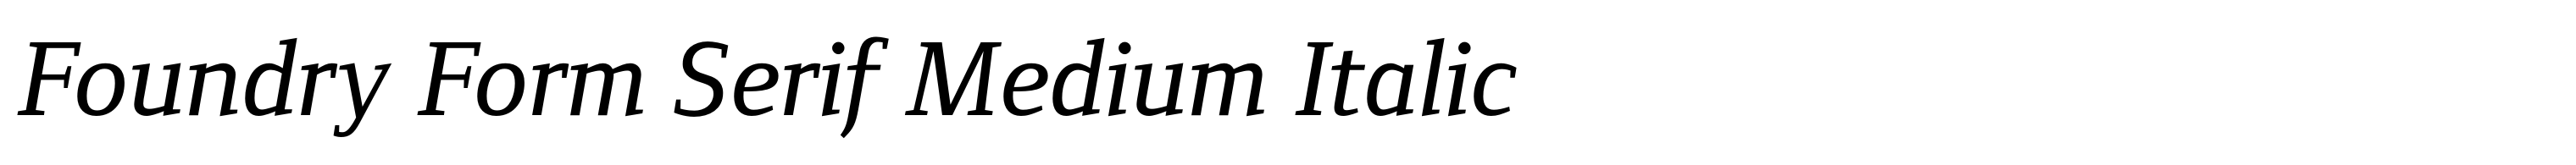 Foundry Form Serif Medium Italic